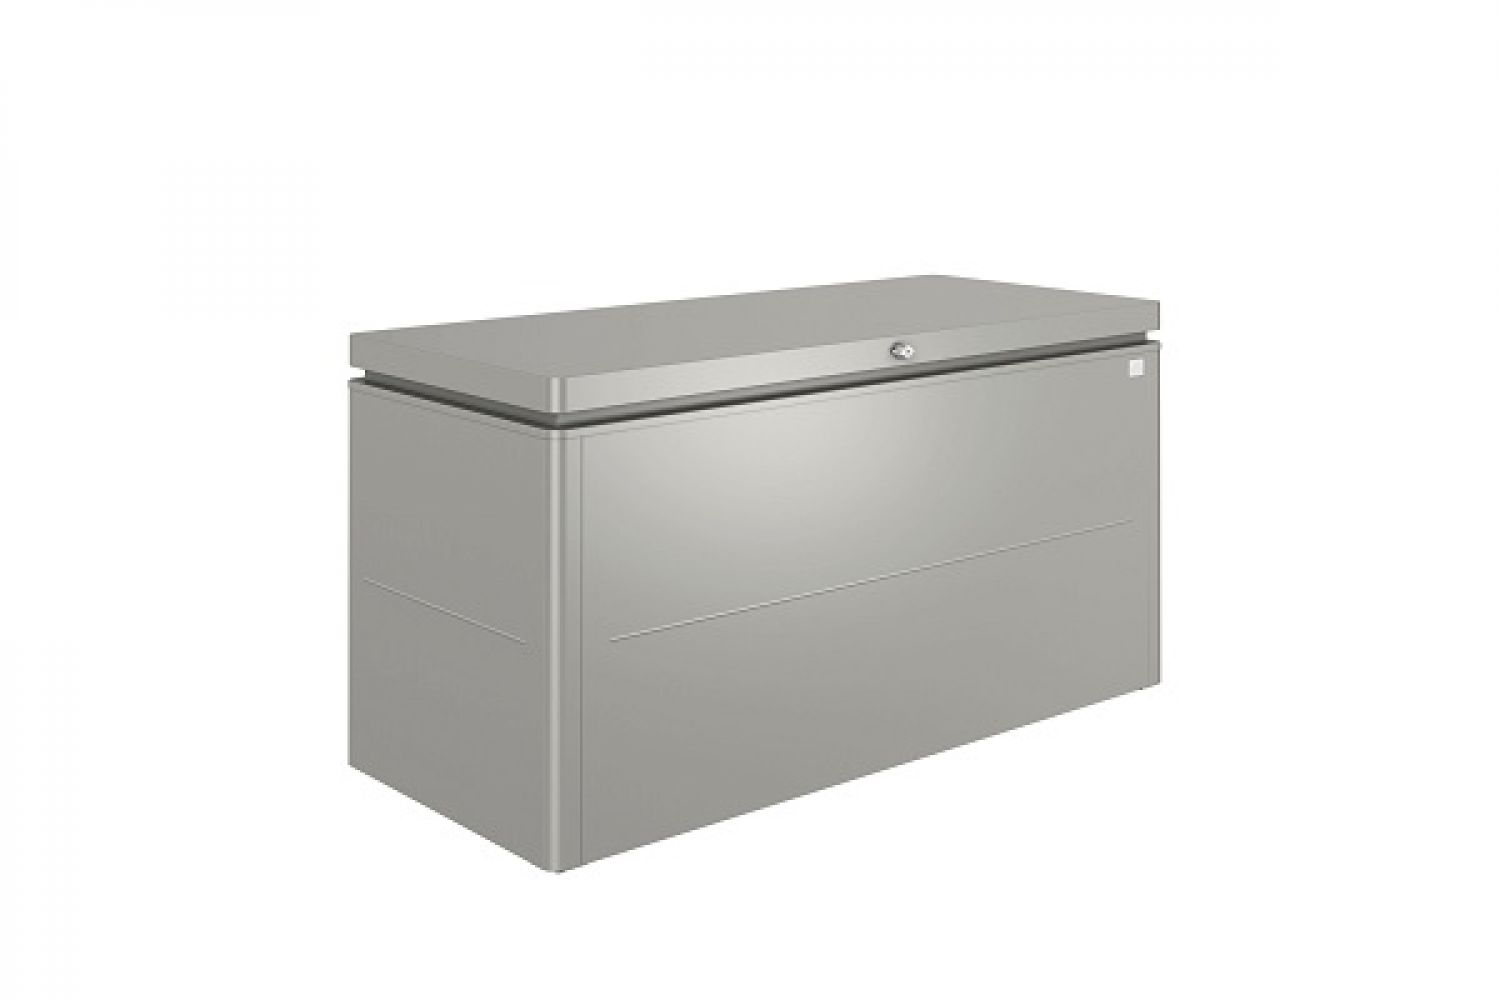 Loungebox metaal 160x70x83.5 cm